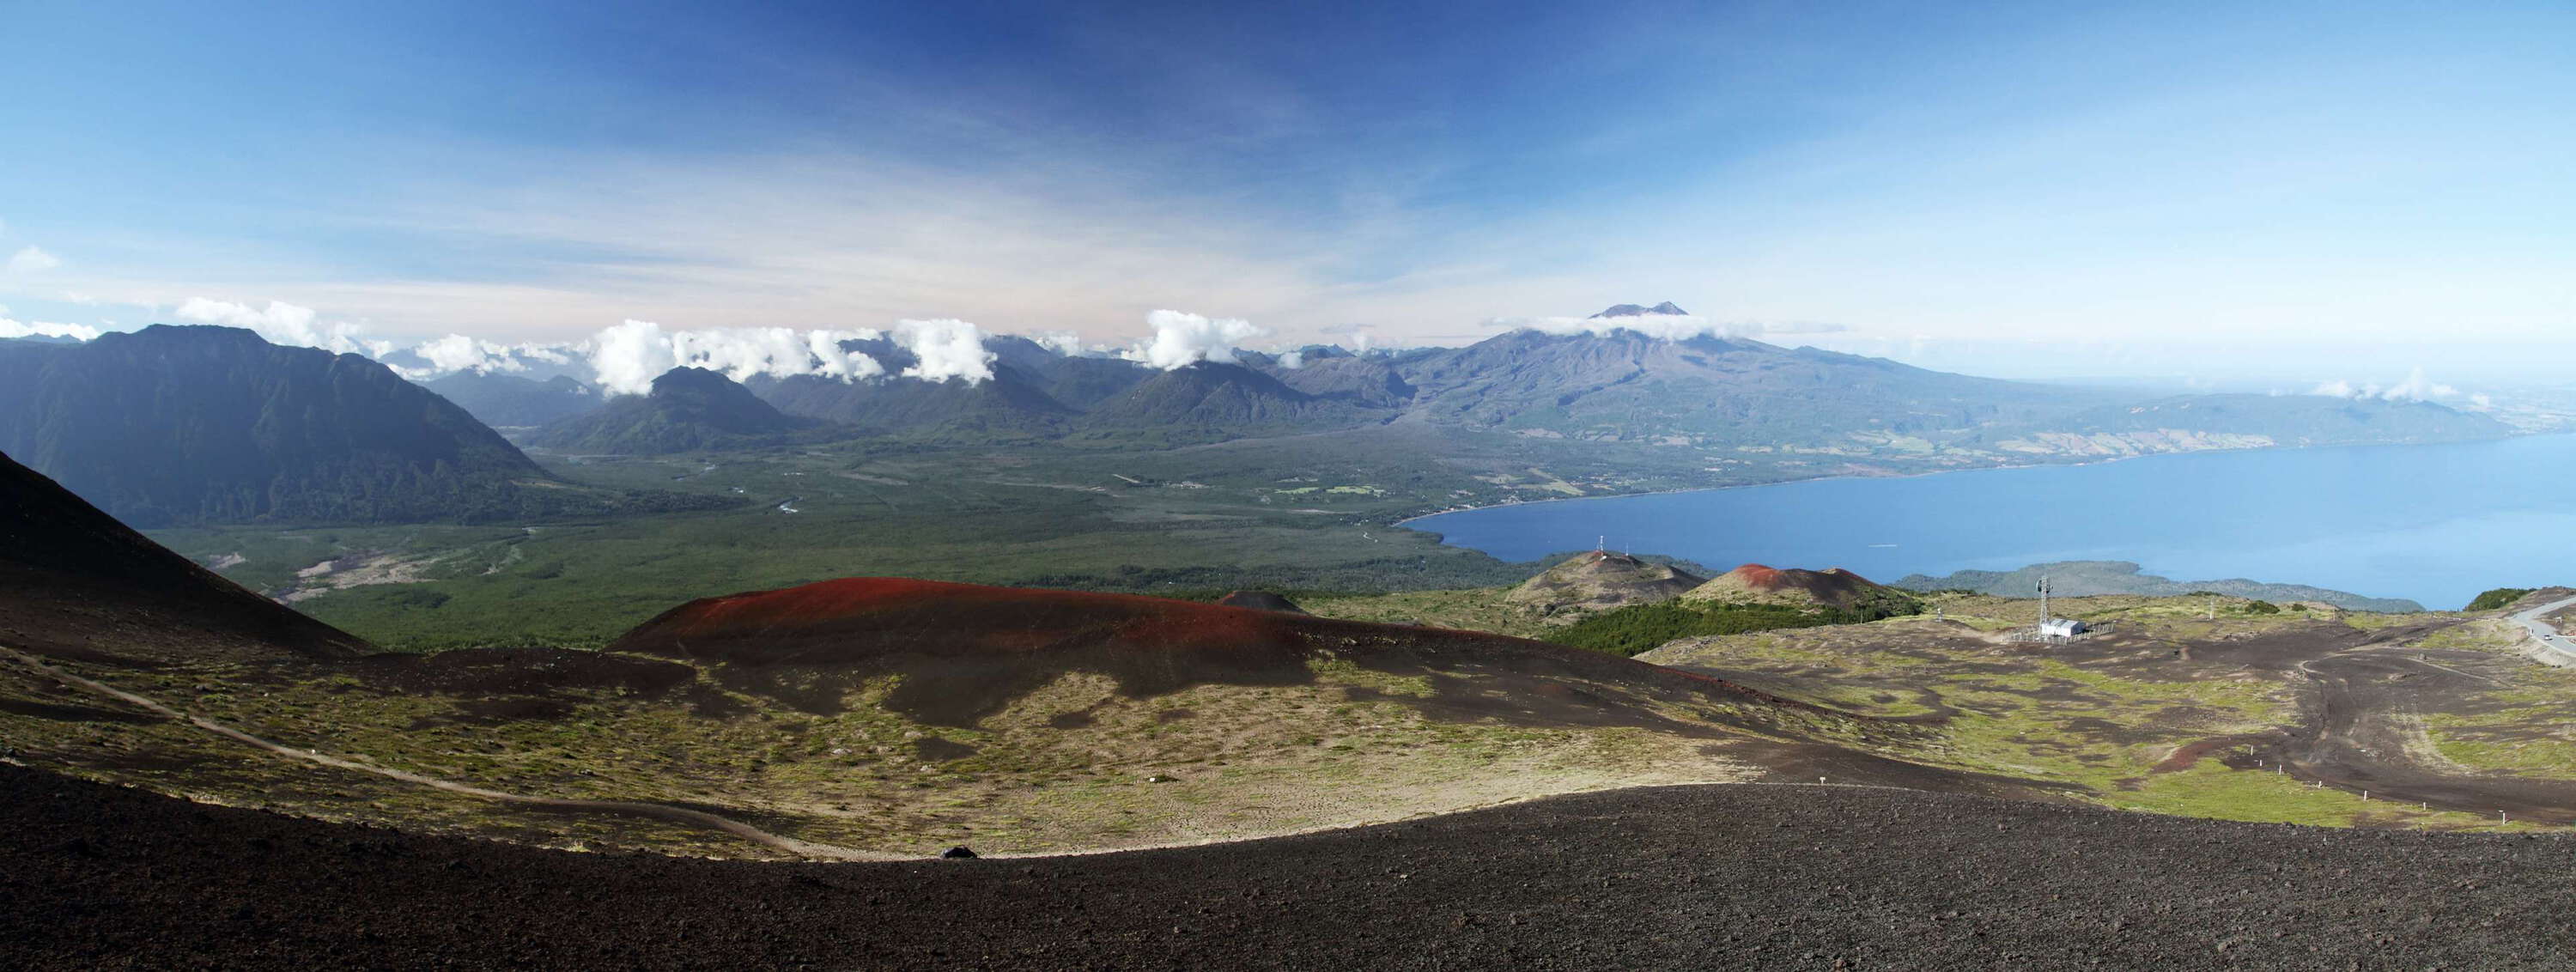 Lago Llanquihue and Volcán Calbuco